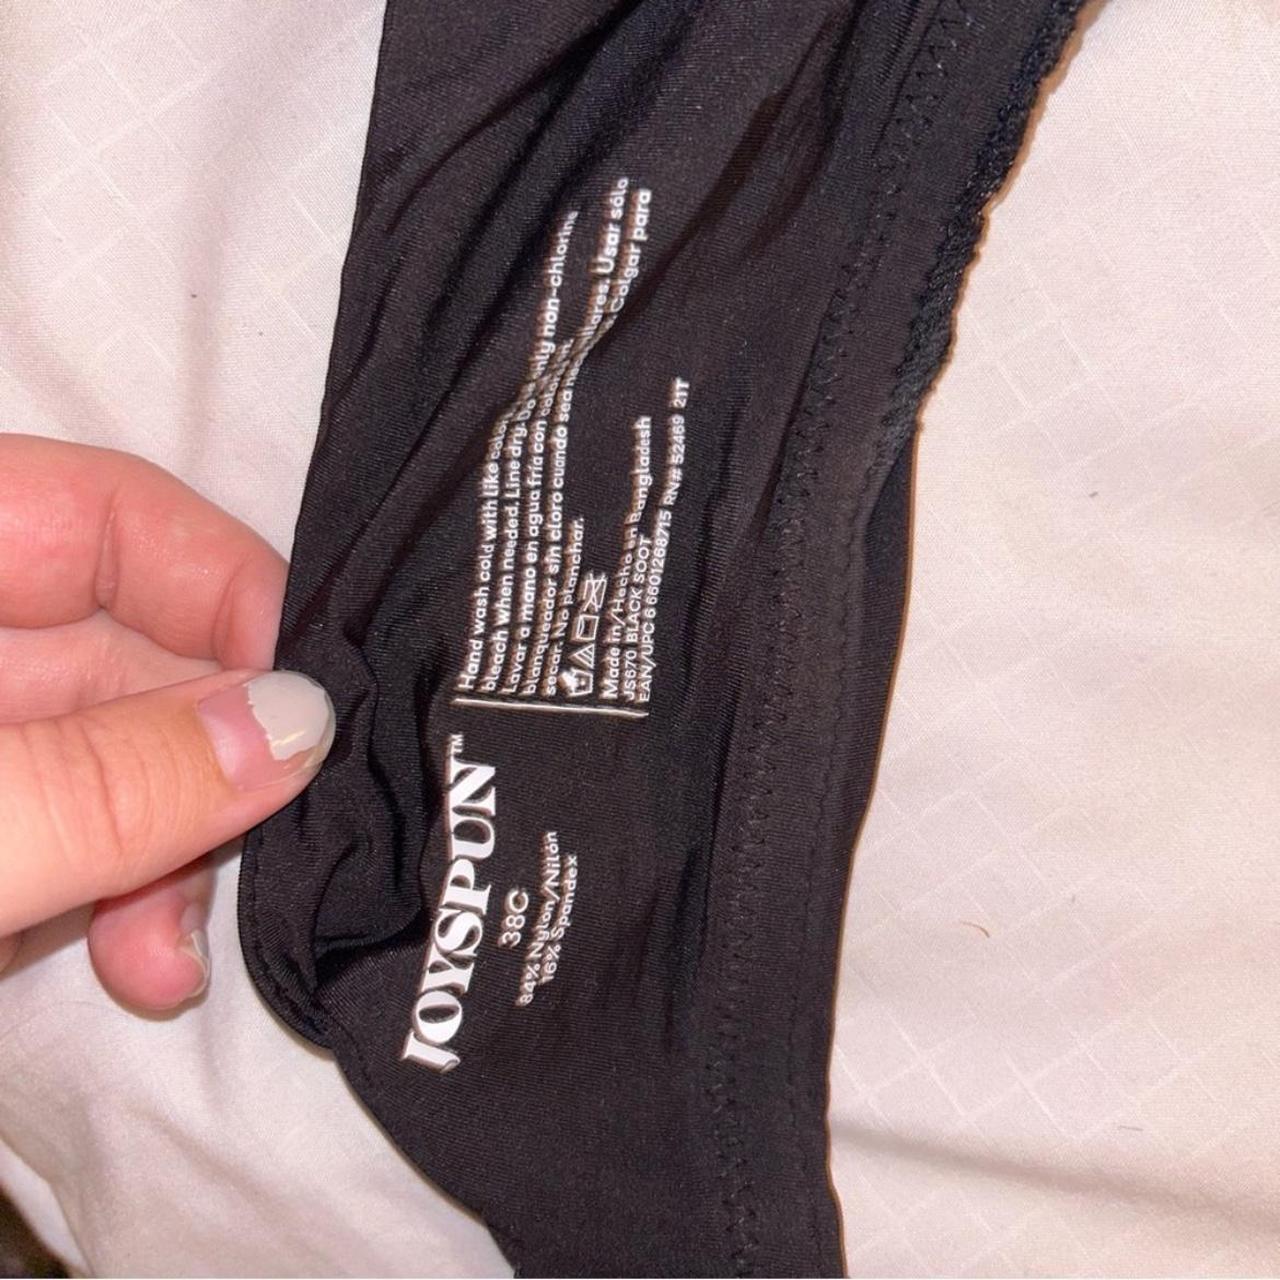 Joyspun black lace push up bra 38c, only worn to try - Depop